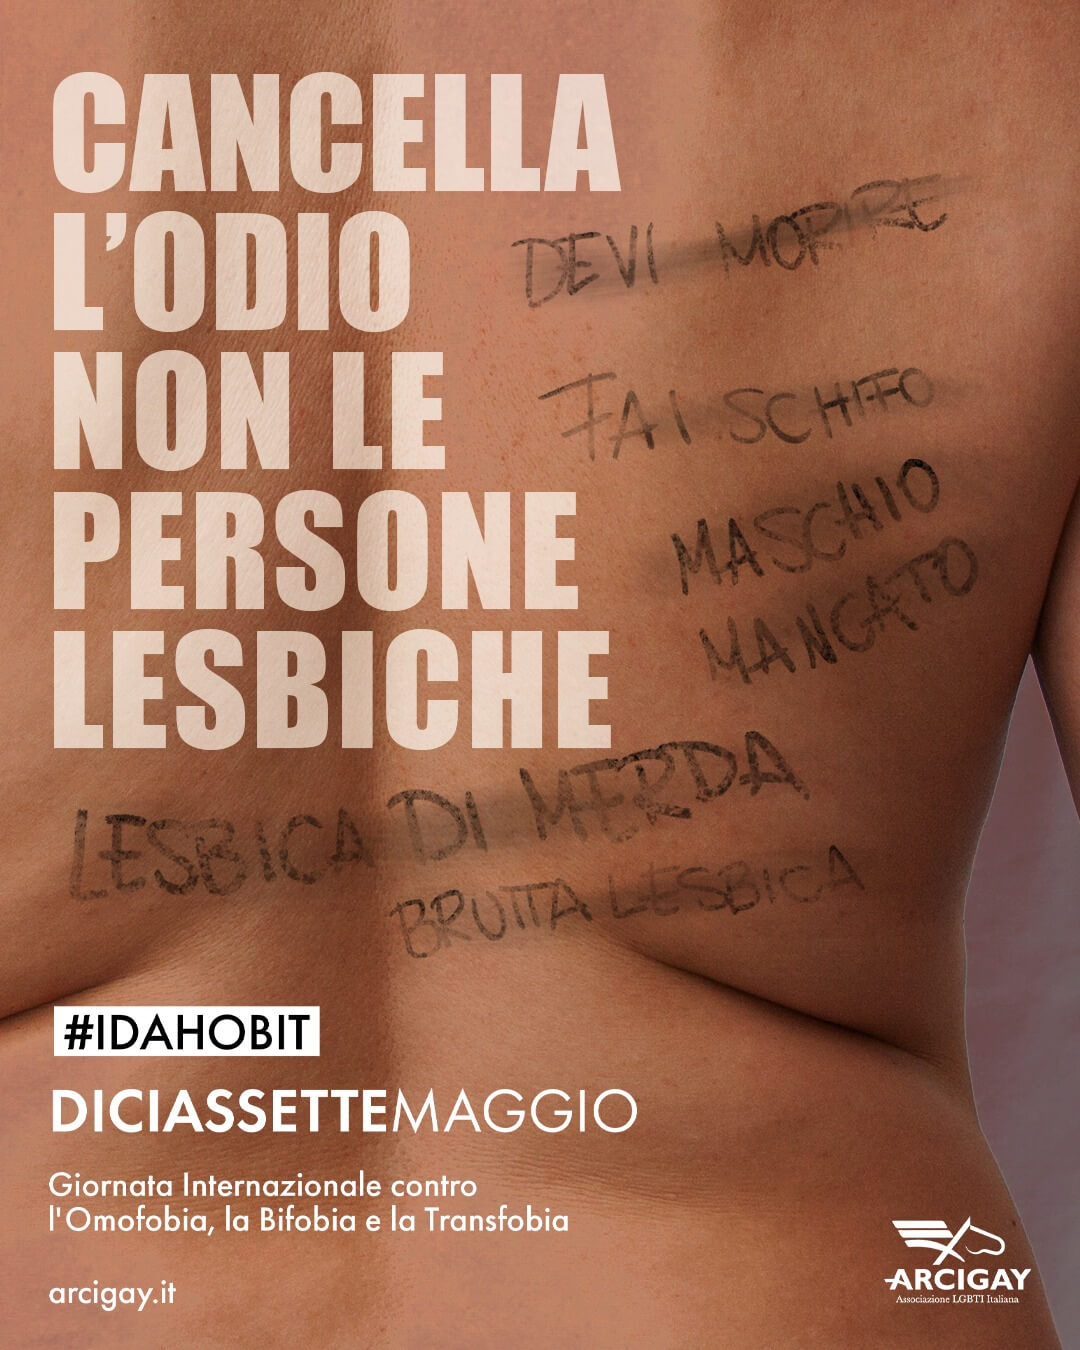 Omobitransfobia, la nuova campagna Arcigay: "Cancella l'odio, non le persone LGBTQIA+" - arcigay omofobia 5 - Gay.it